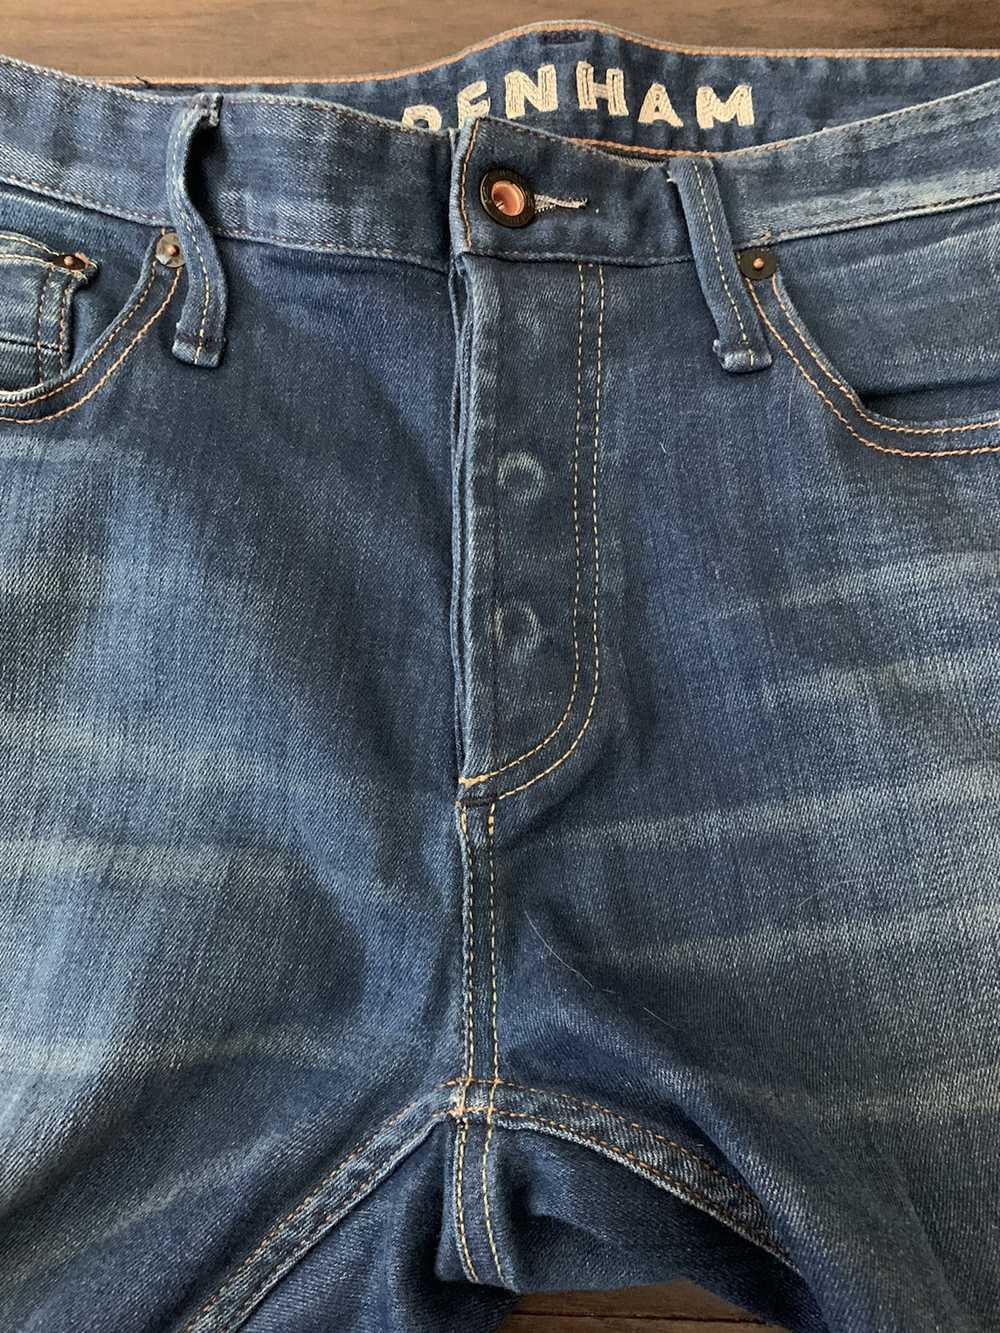 Denham Denham Razor Slim Fit Jeans - image 8